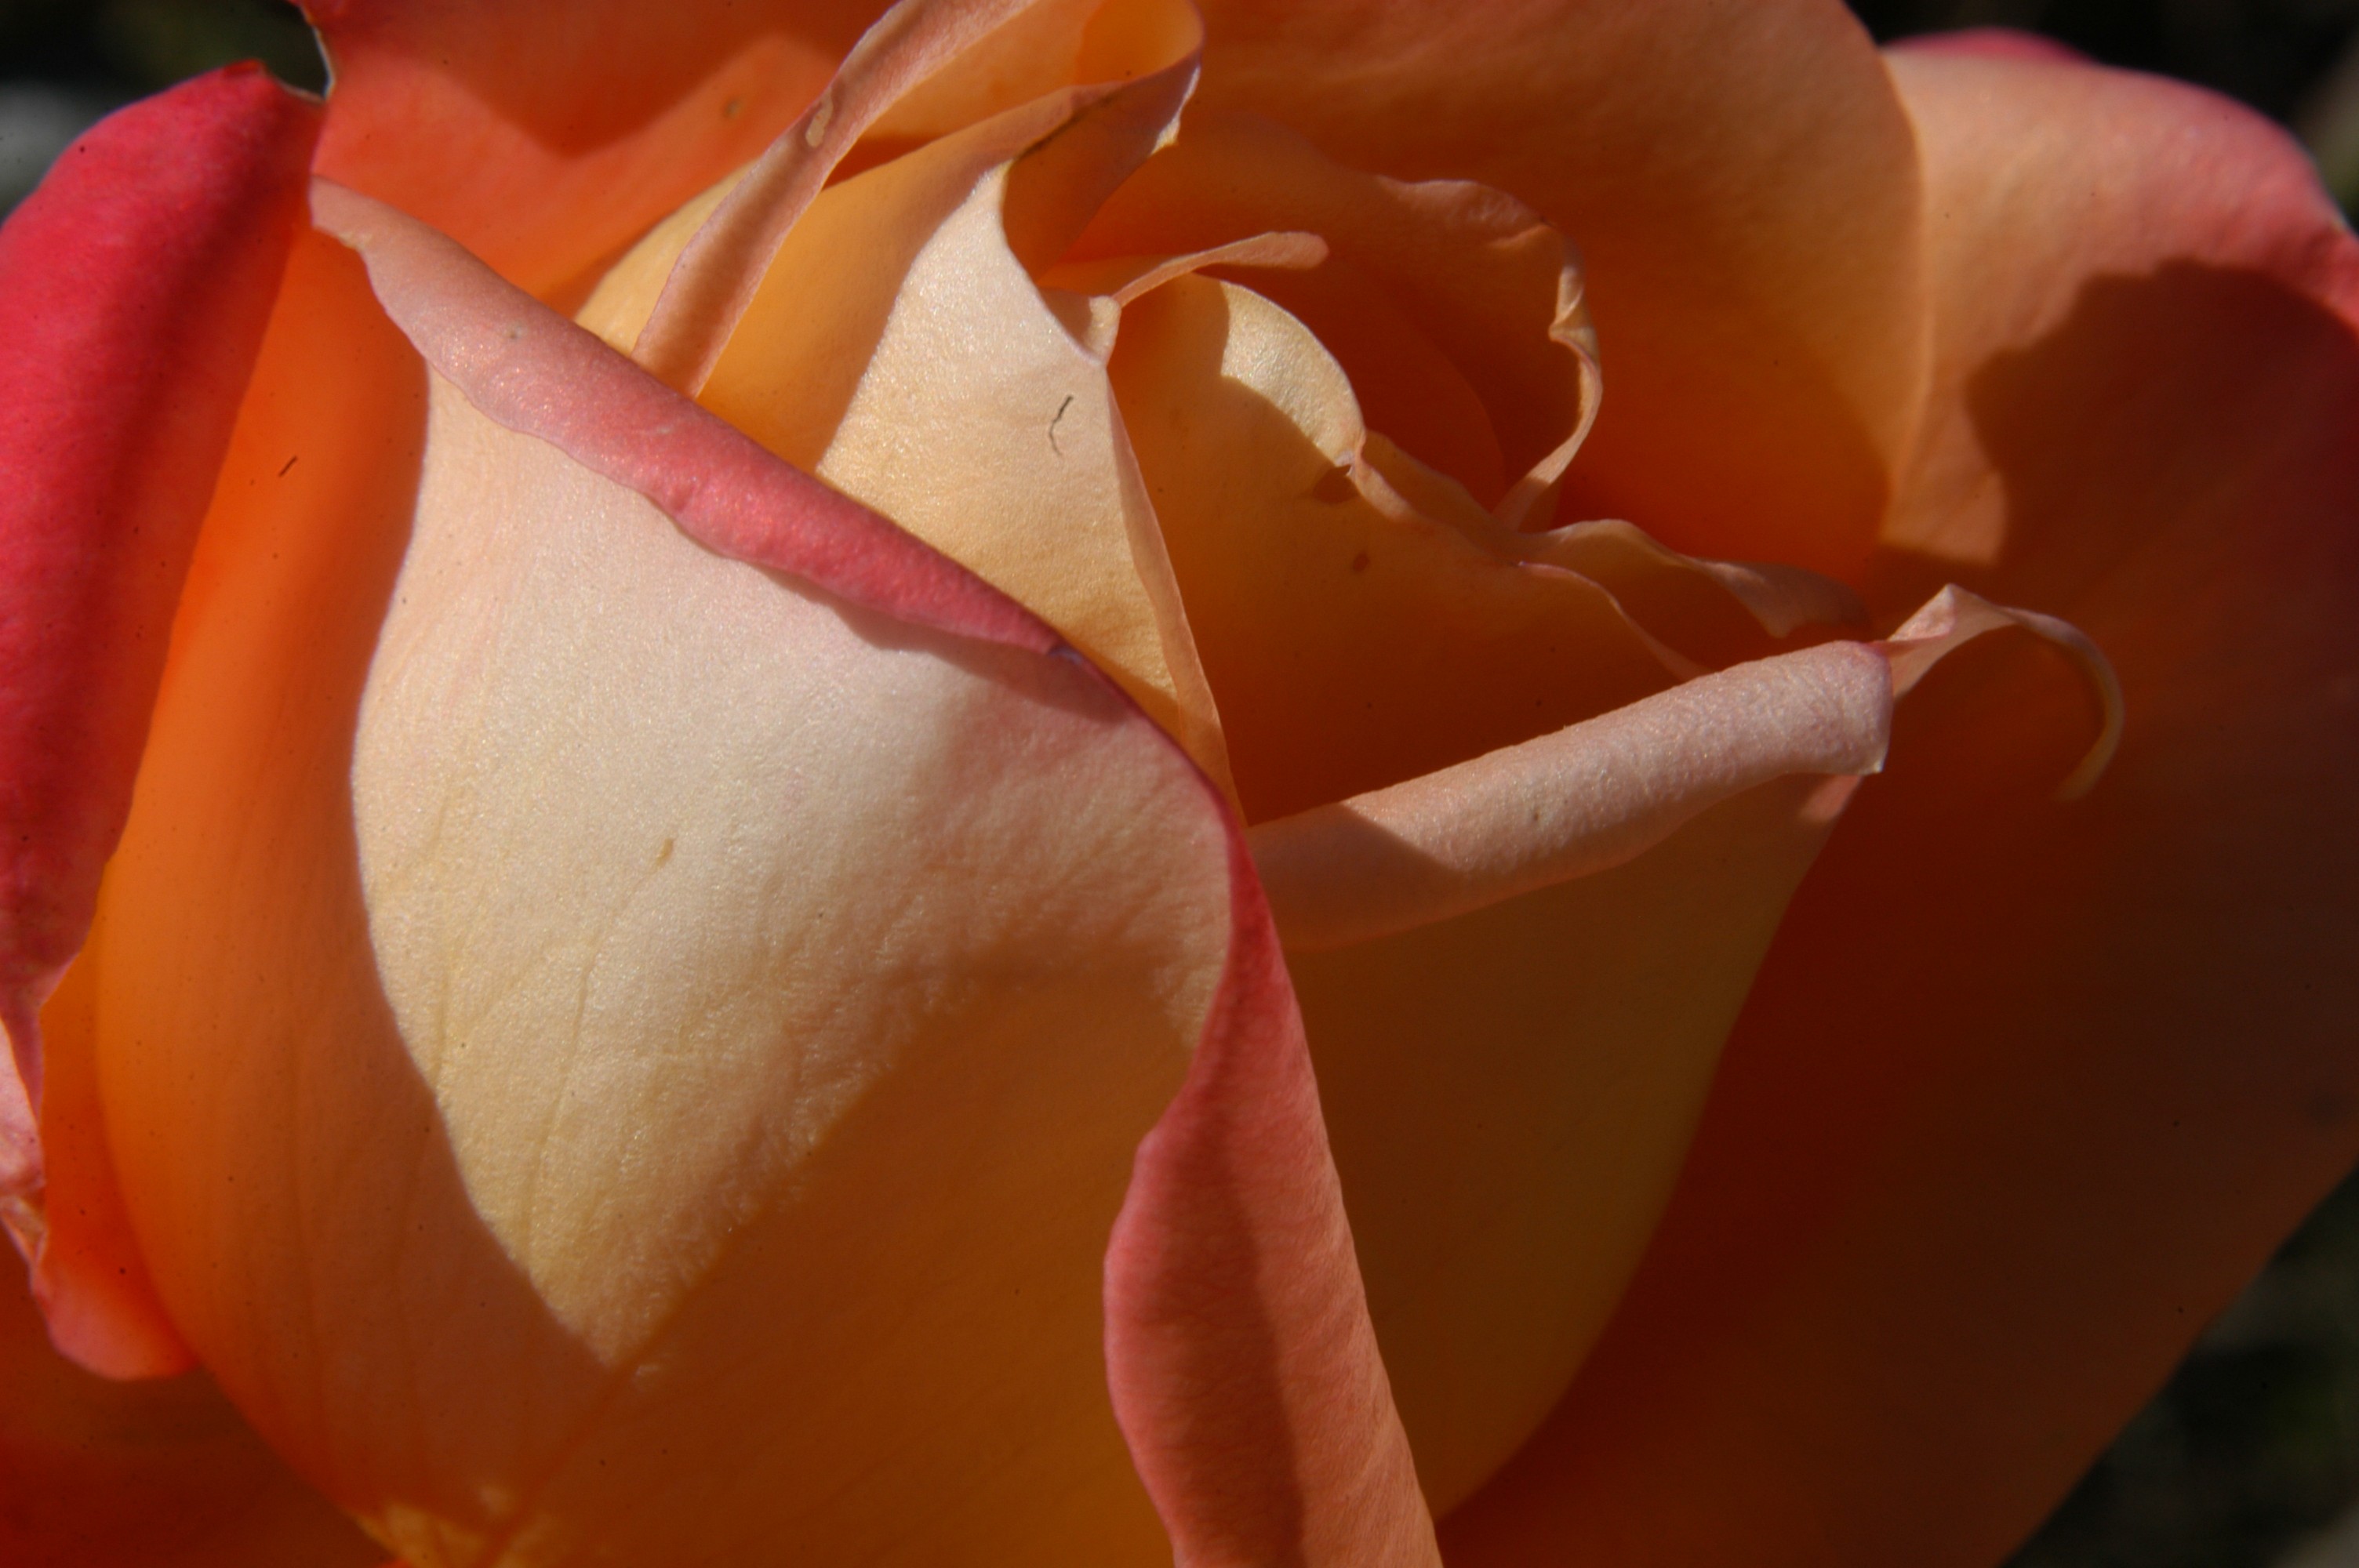 A beautiful orange rose